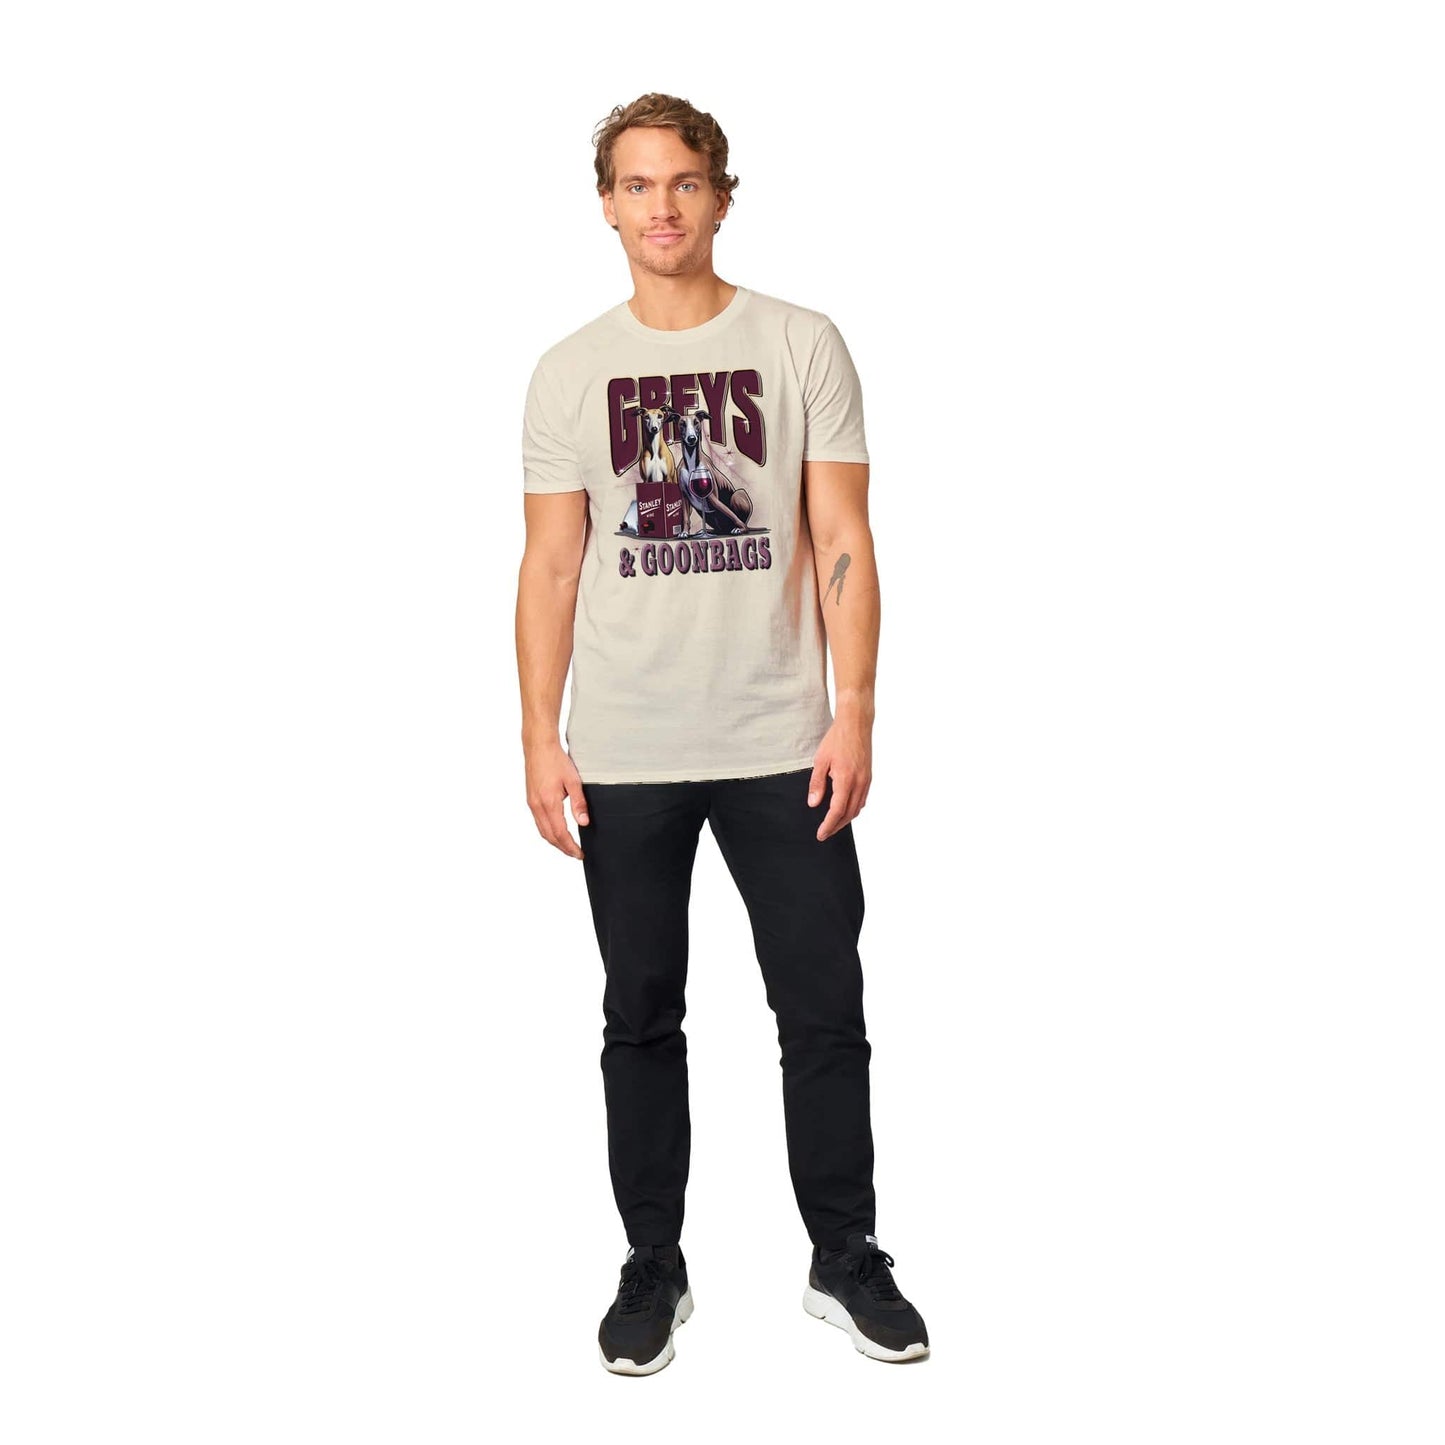 Greys And Goonbags T-Shirt Graphic Tee BC Australia